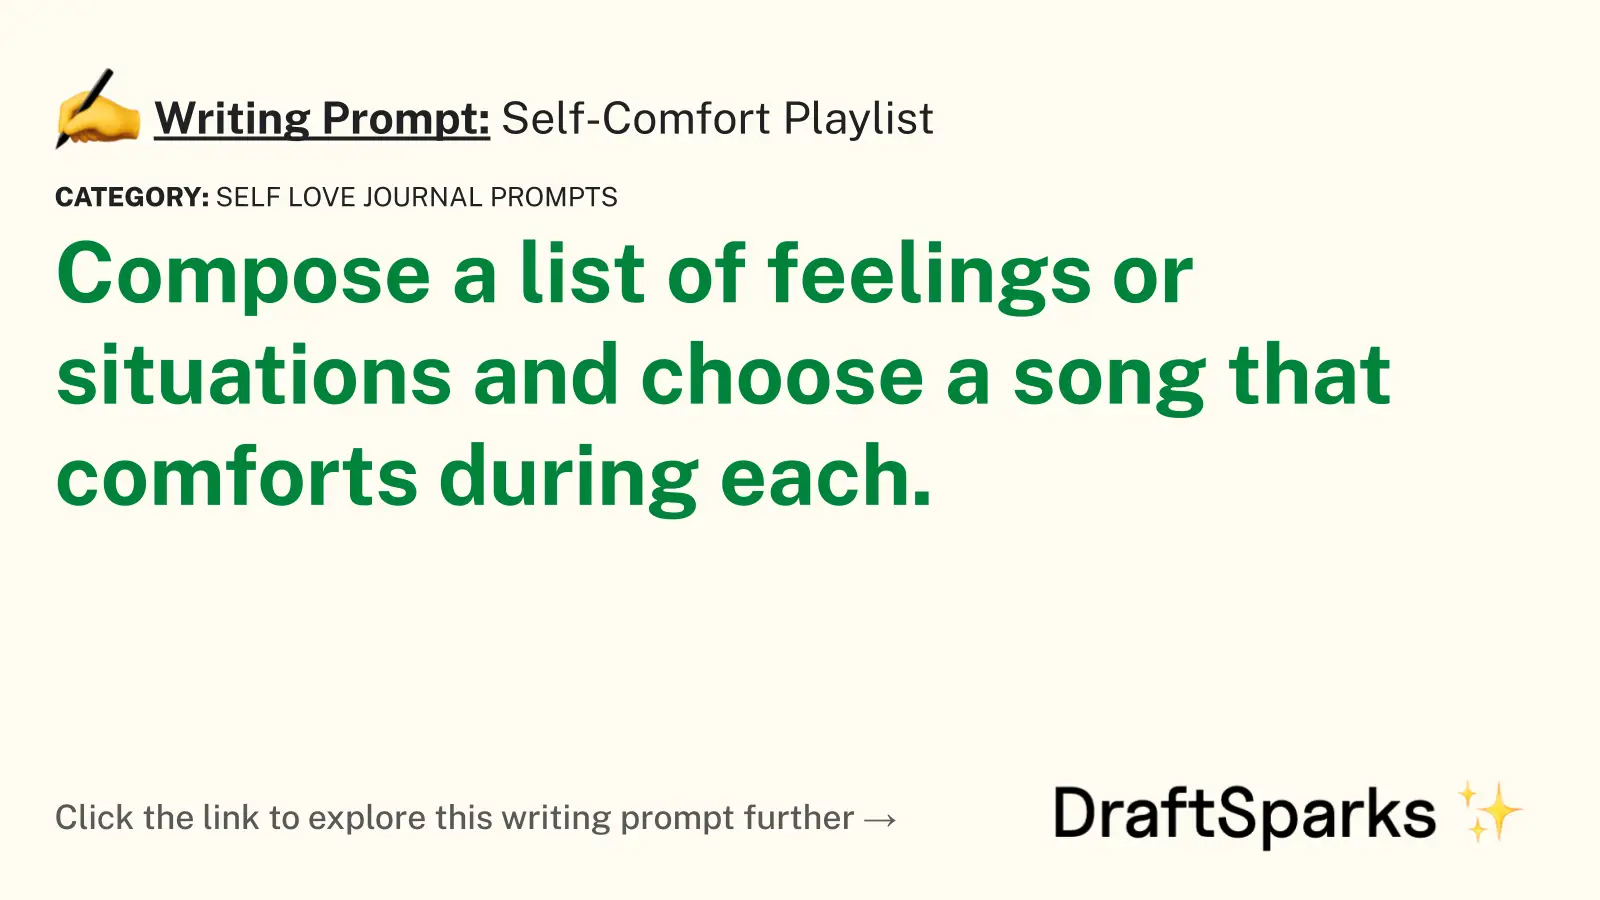 Self-Comfort Playlist